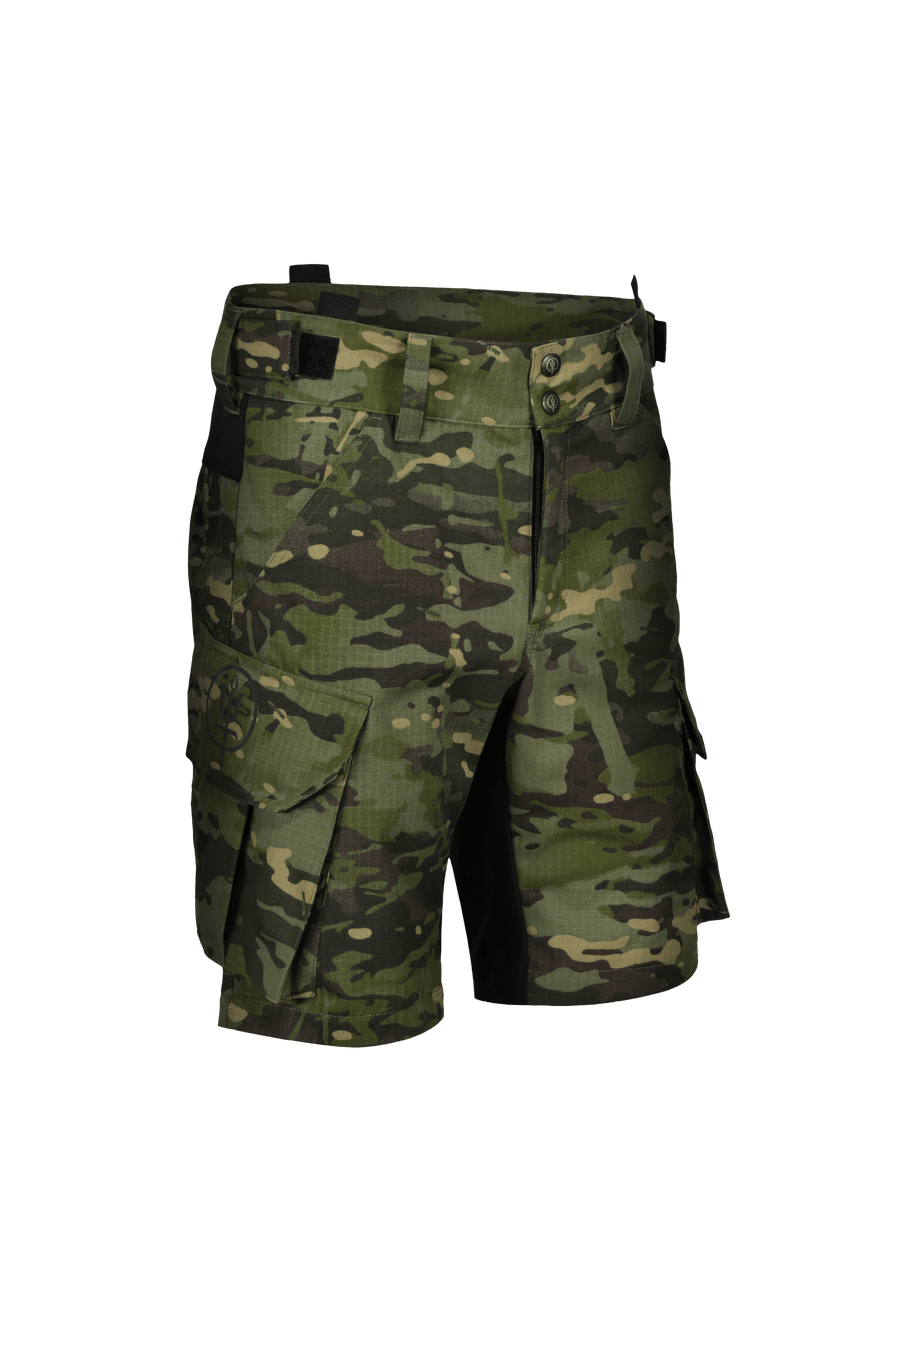 CHARGE SHORTS in Tropic | Men's walking, hiking heatwear shorts – ThruDark